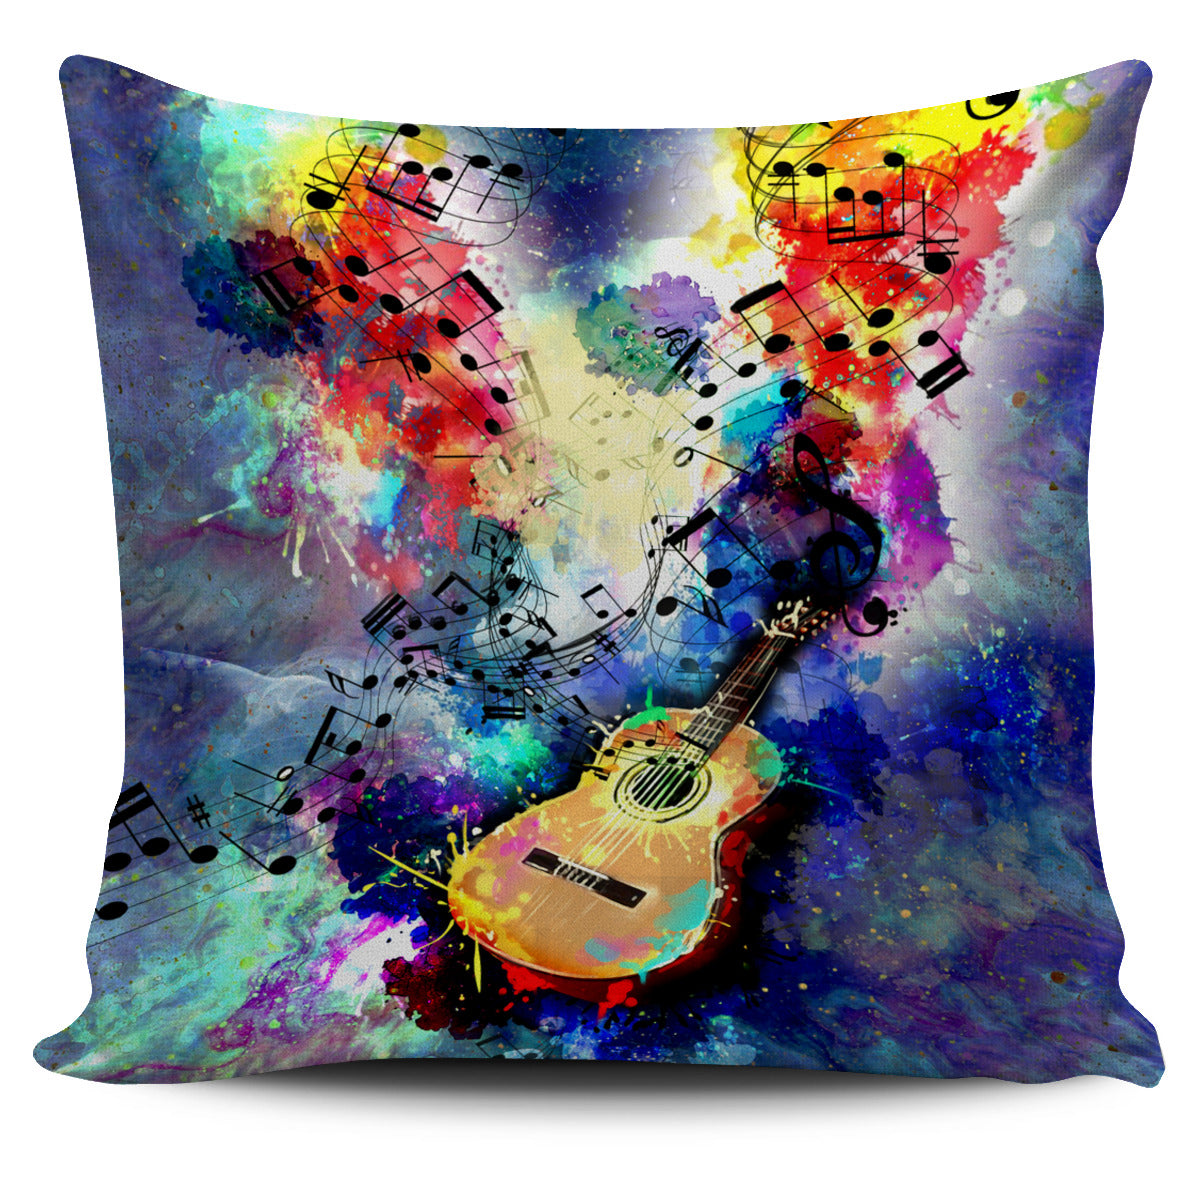 Artistic Guitar Pillow Cover